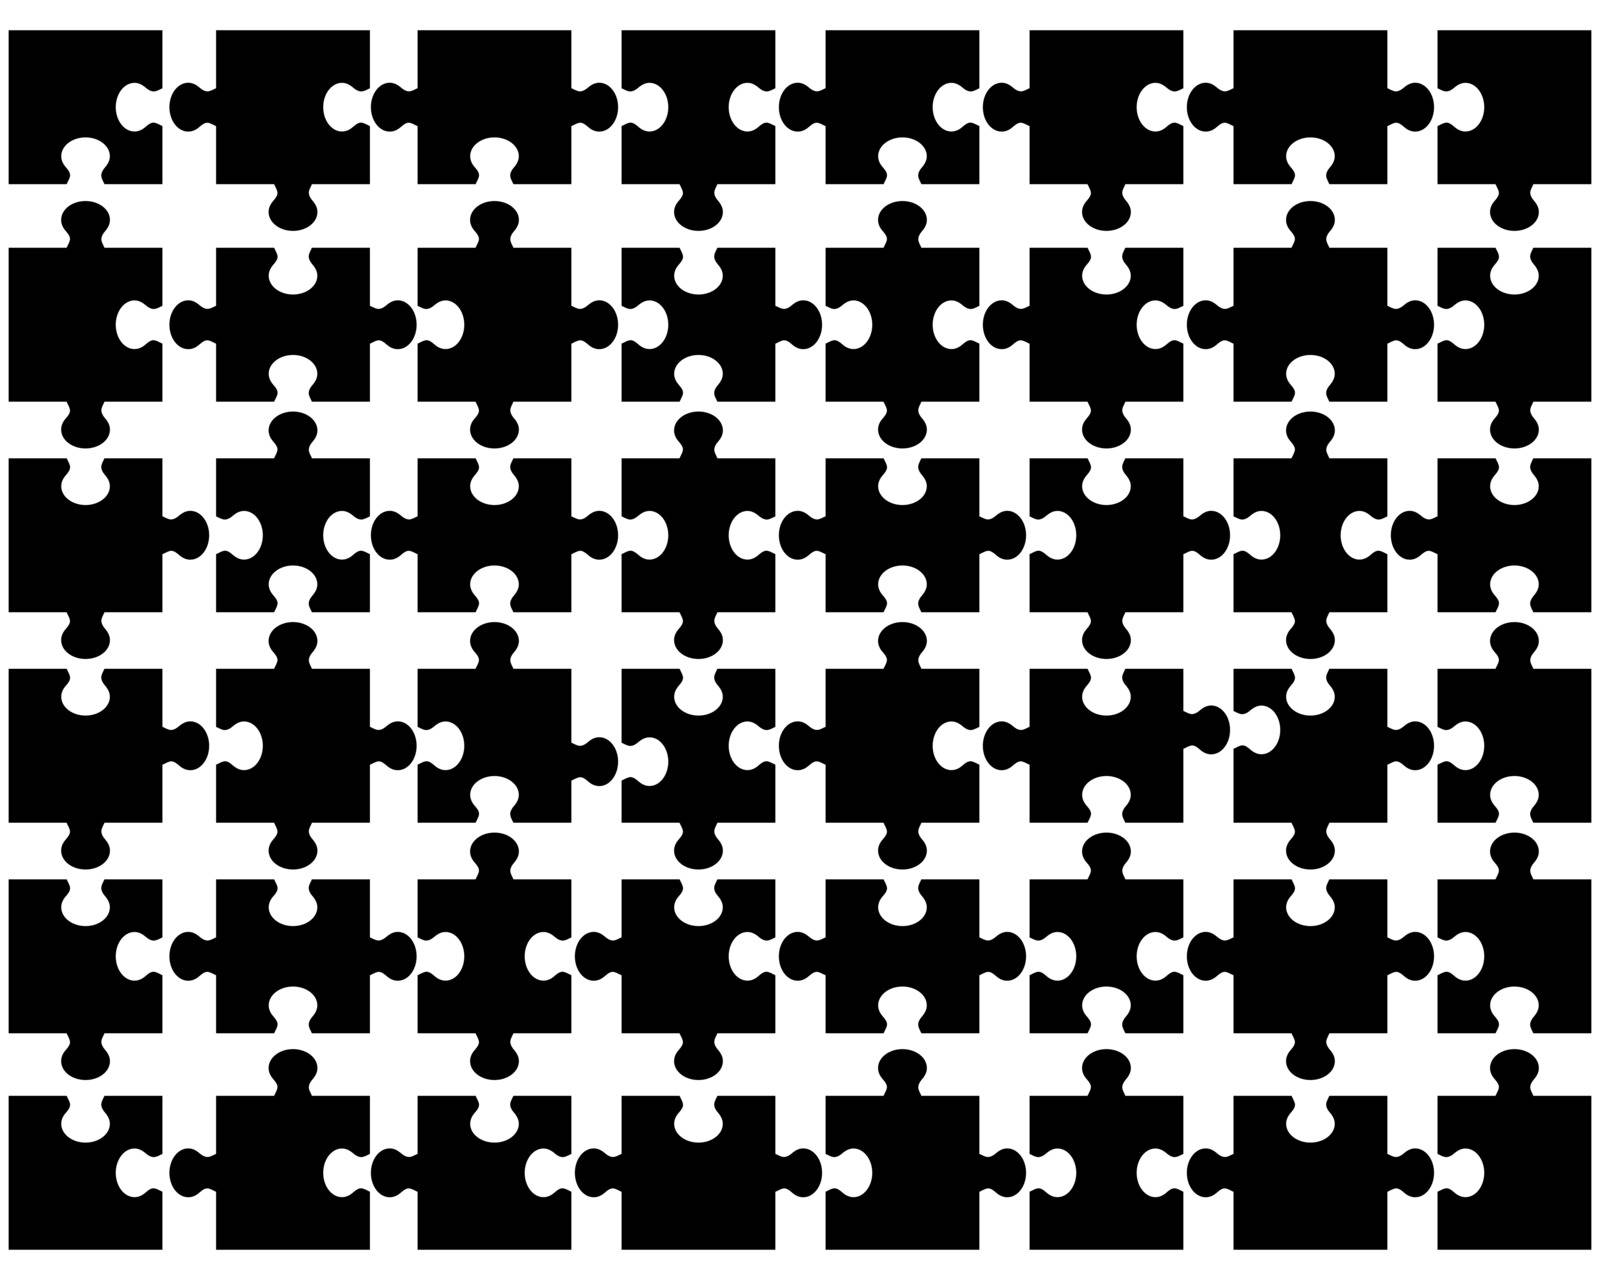 black puzzle by ratkomat